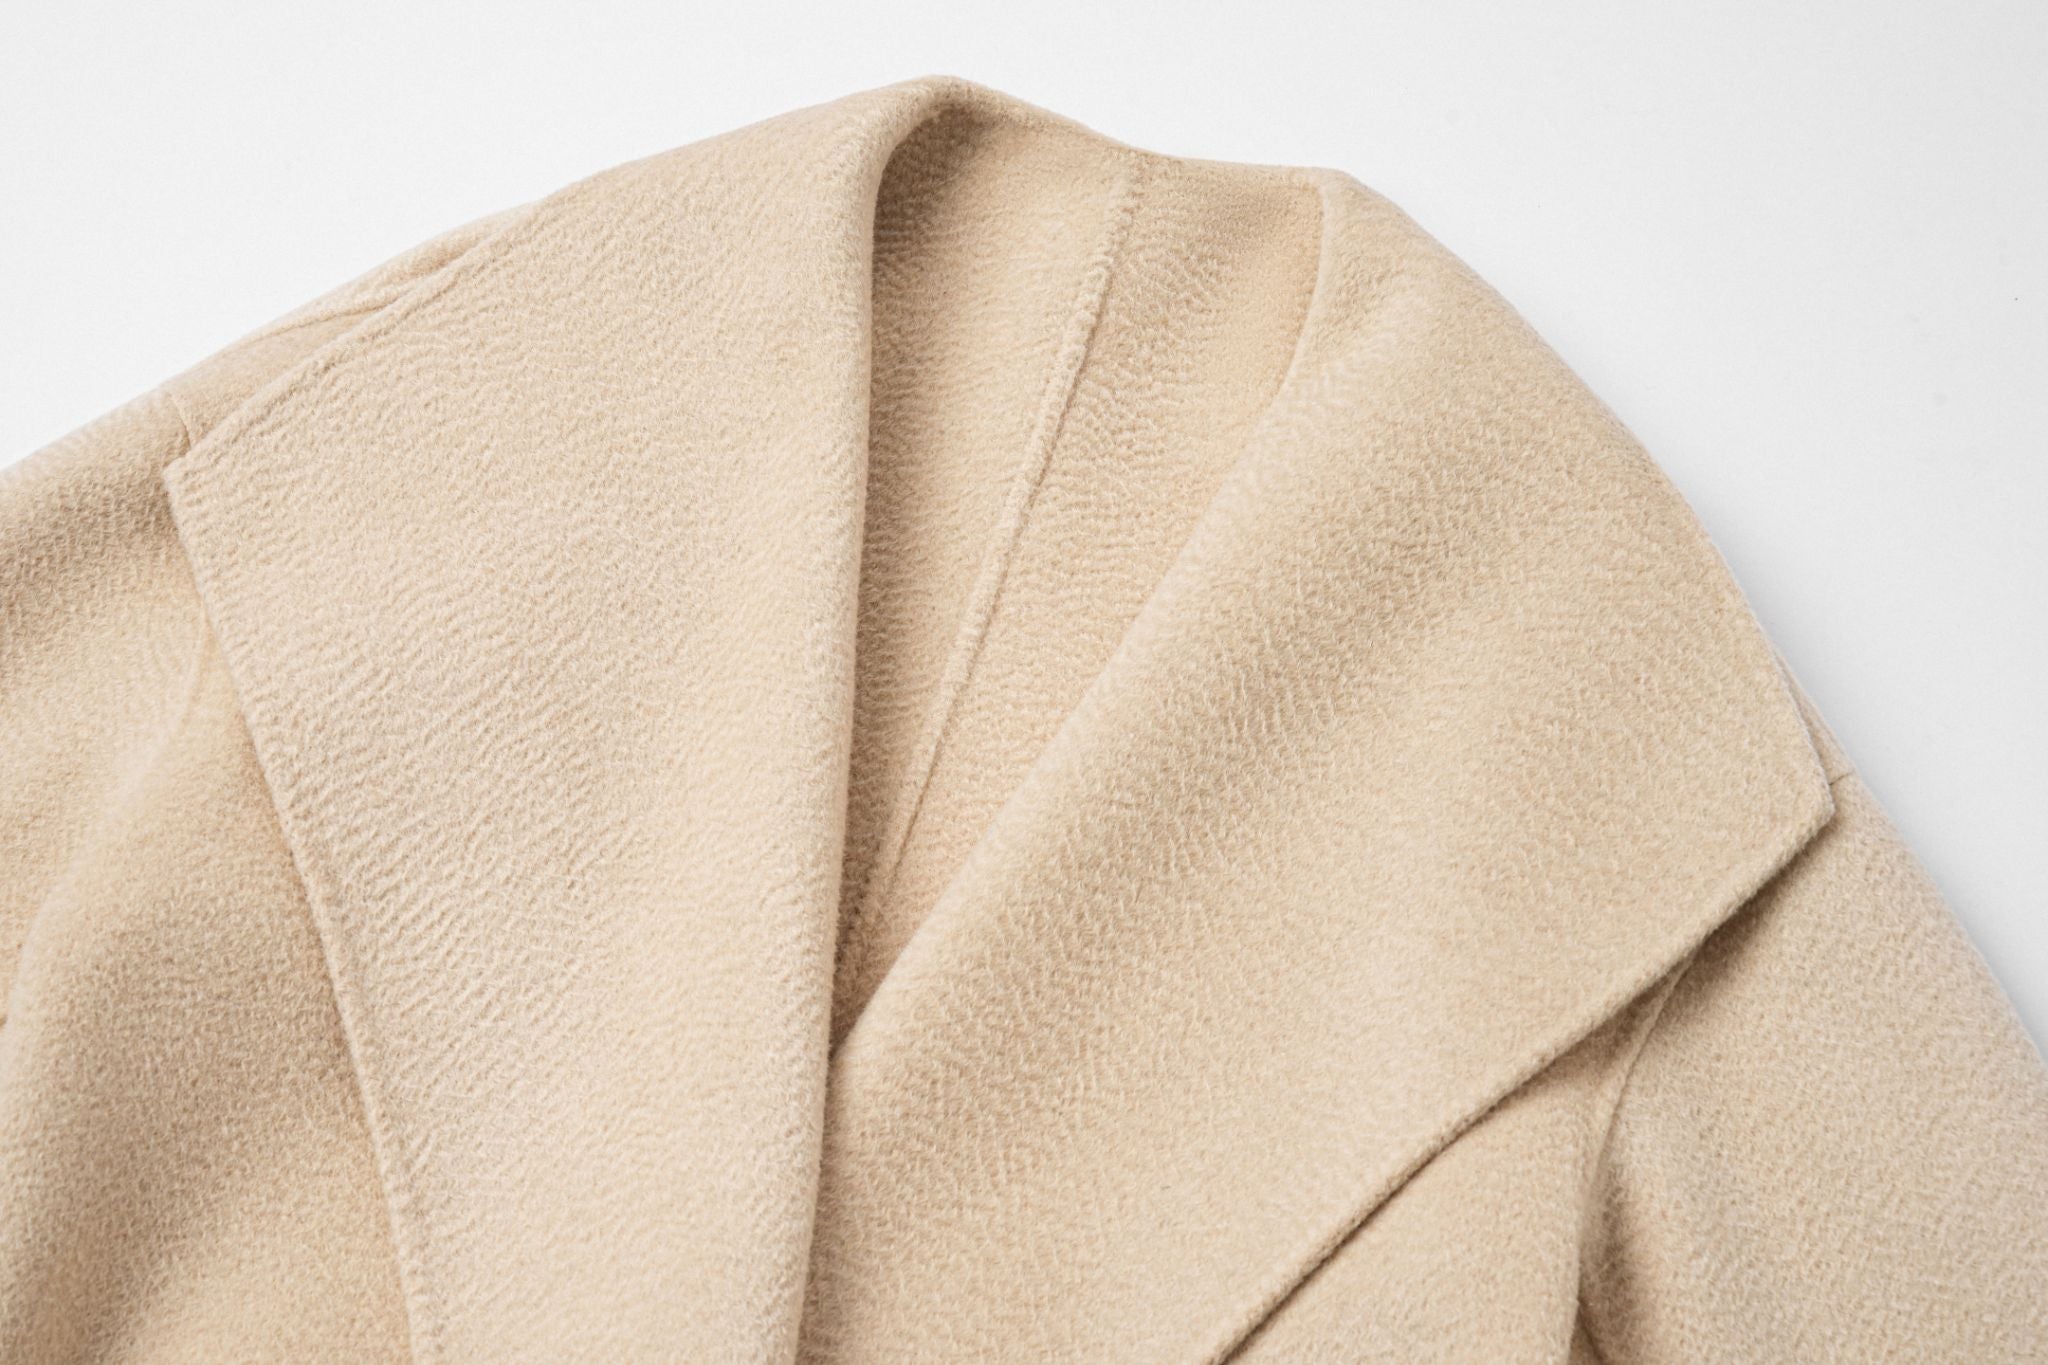 Timeless Elegance: Full-Length Cashmere Coat Collection for Women